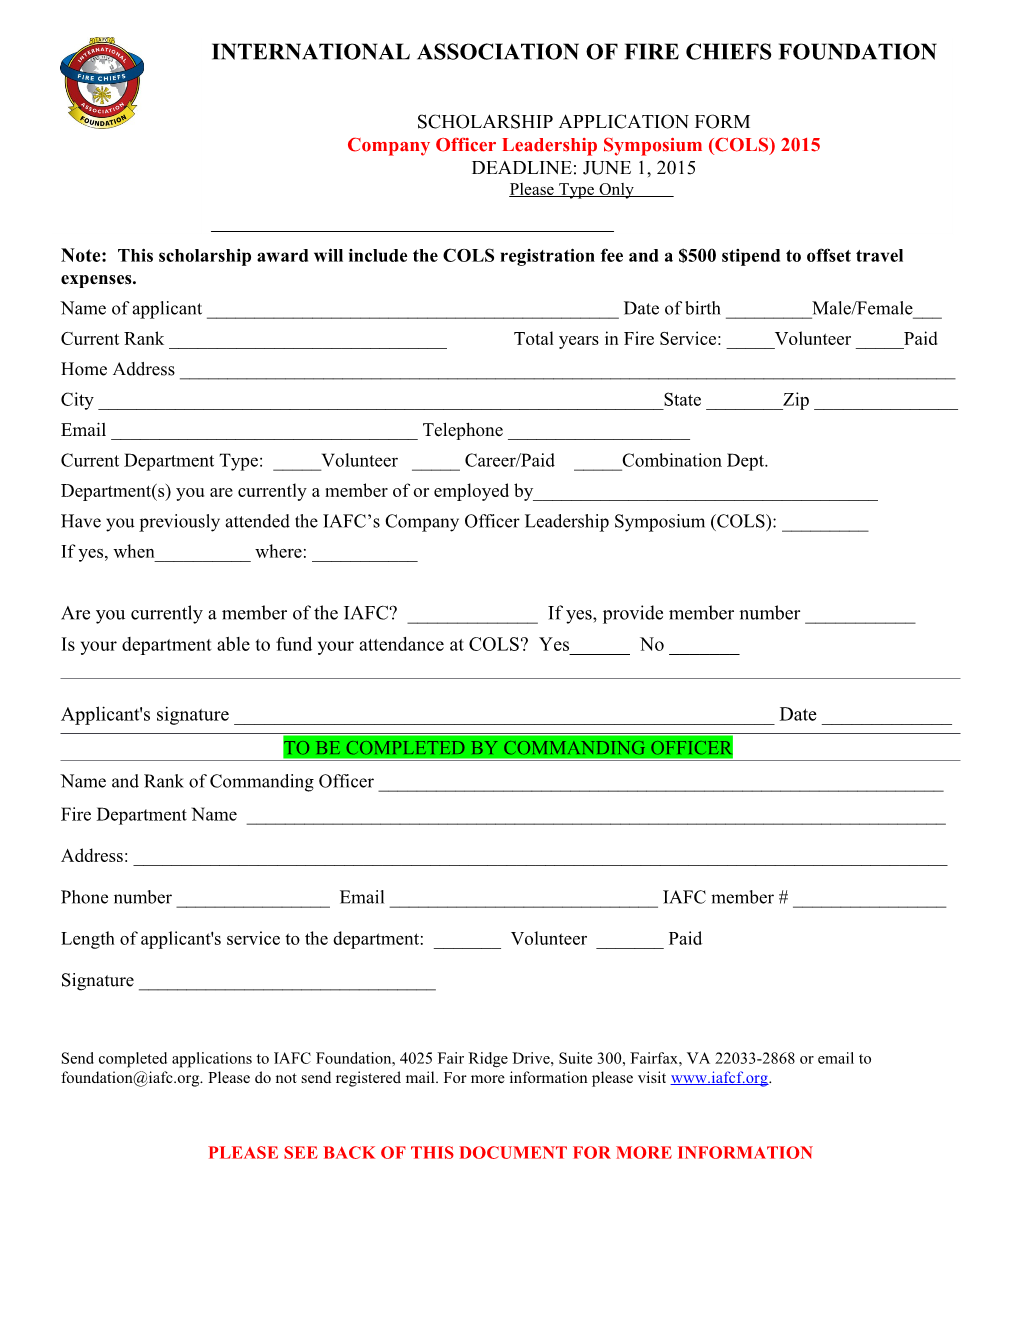 SCHOLARSHIP APPLICATION FORM - Deadline August 1, 2006